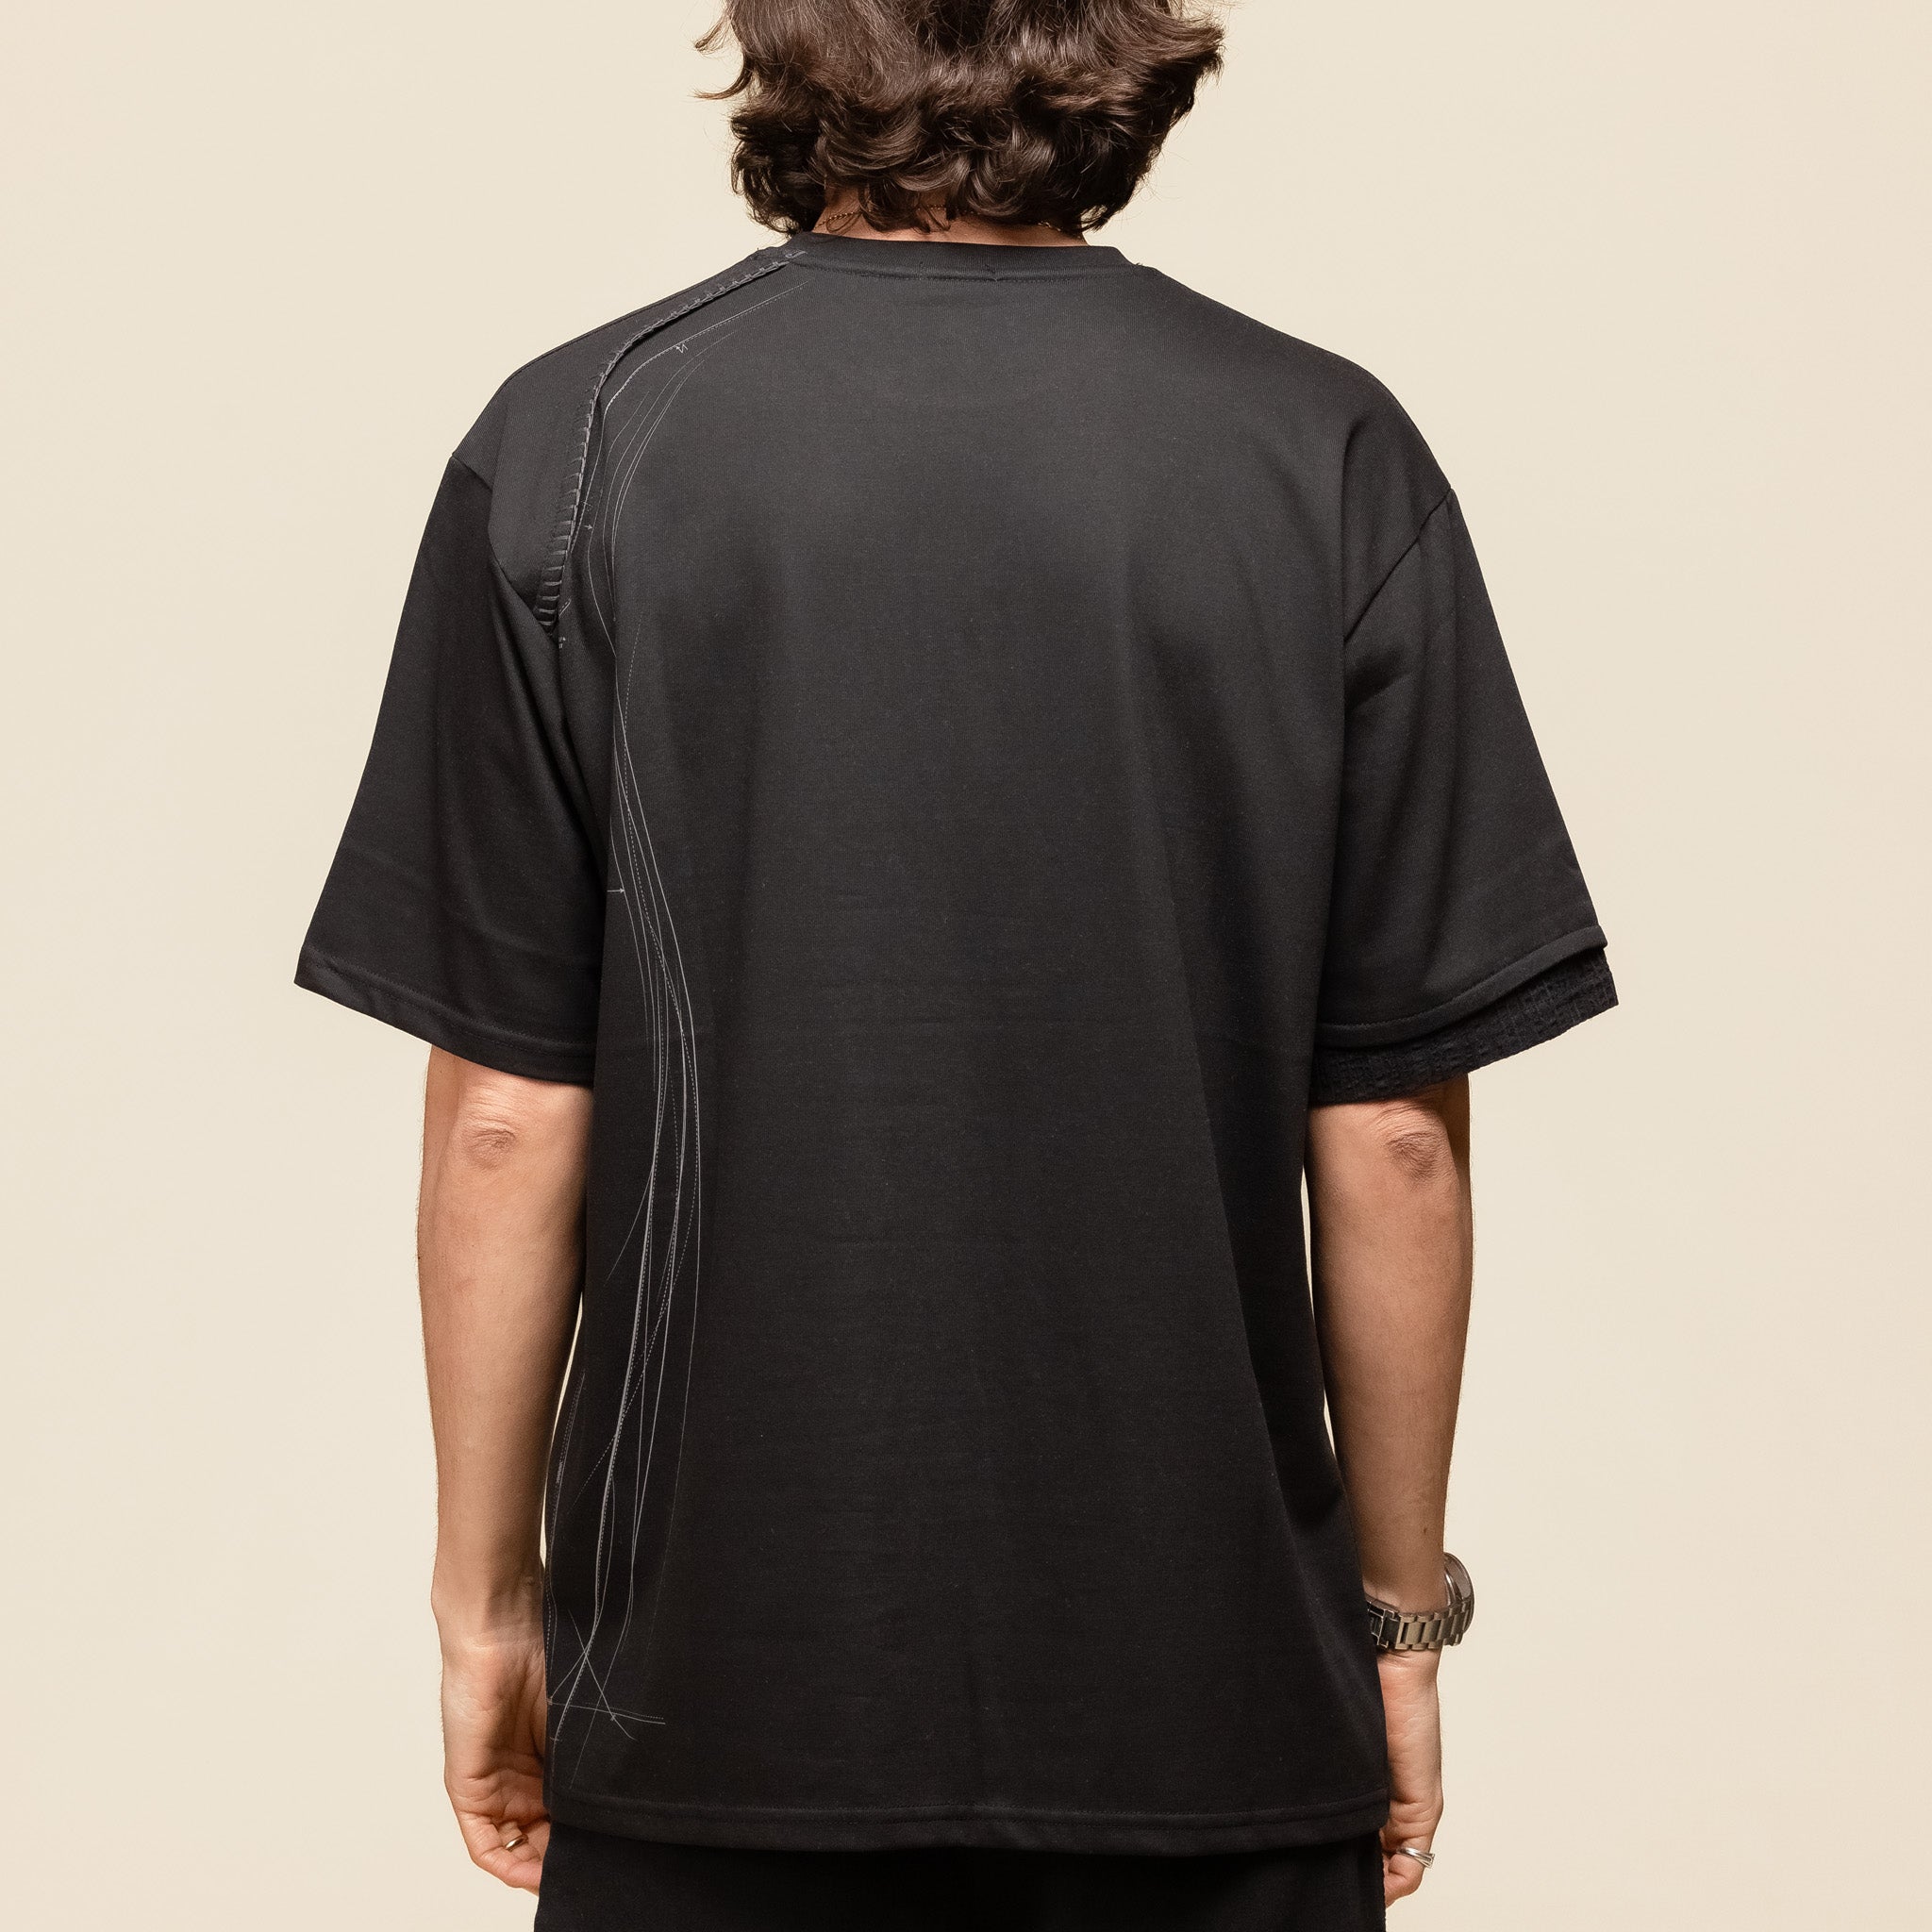 XLIM - EP.5 03 T-Shirt - Black